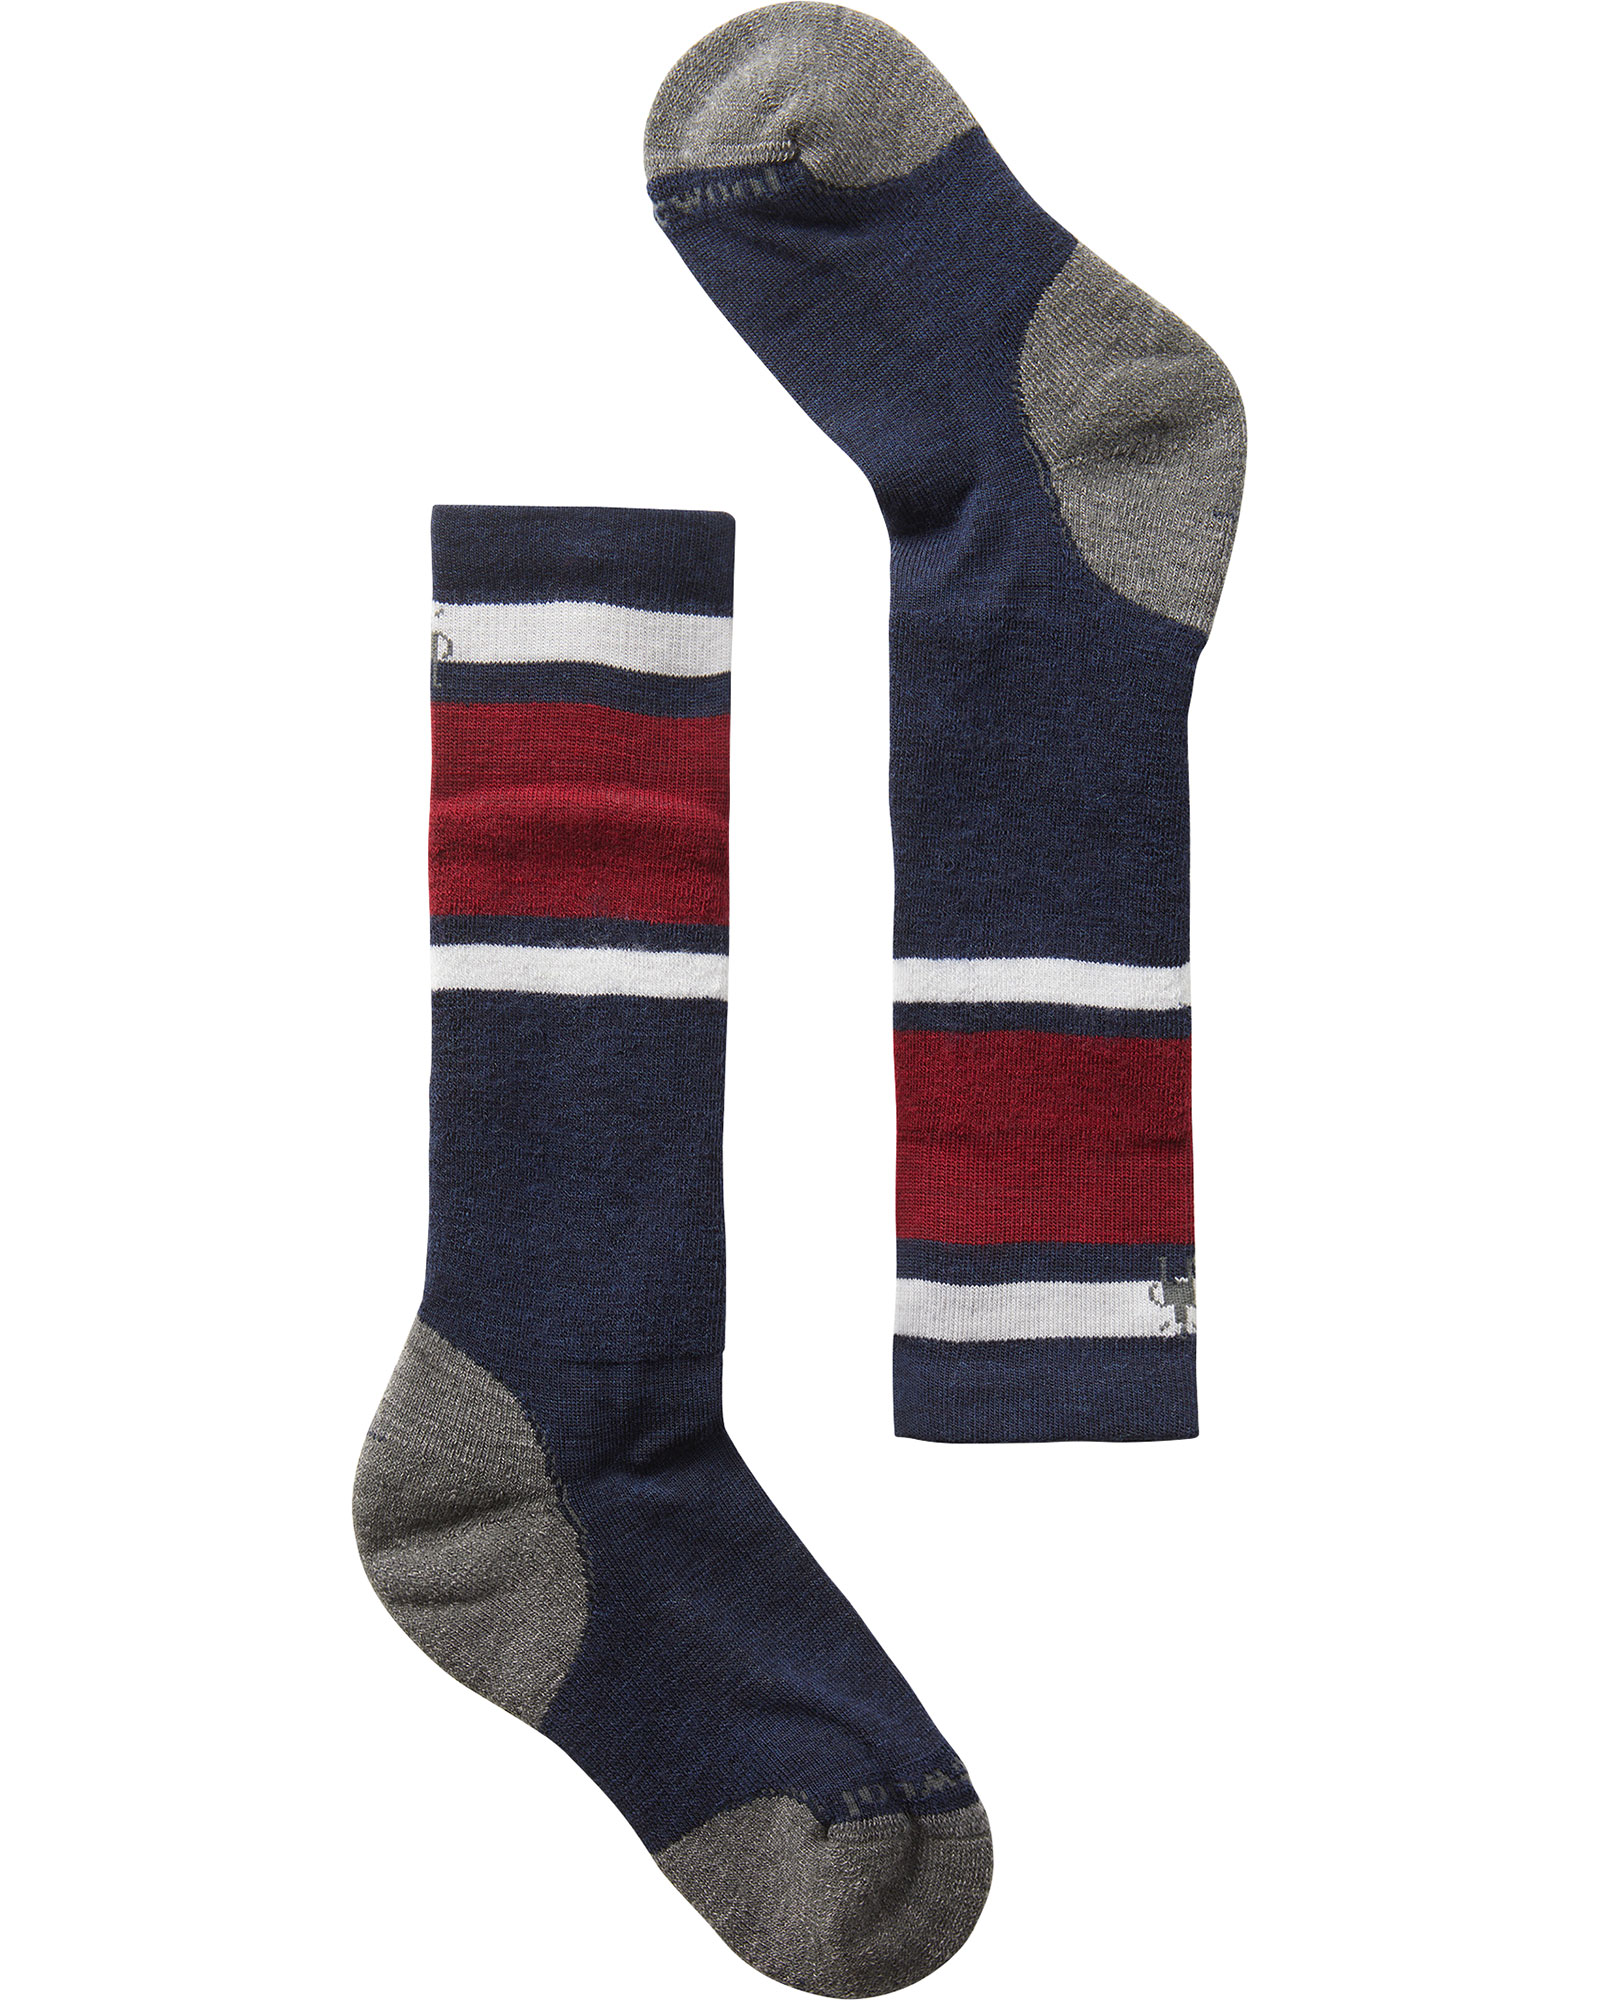 Smartwool Wintersport Full Cushion Kids’ Socks - Deep Navy M